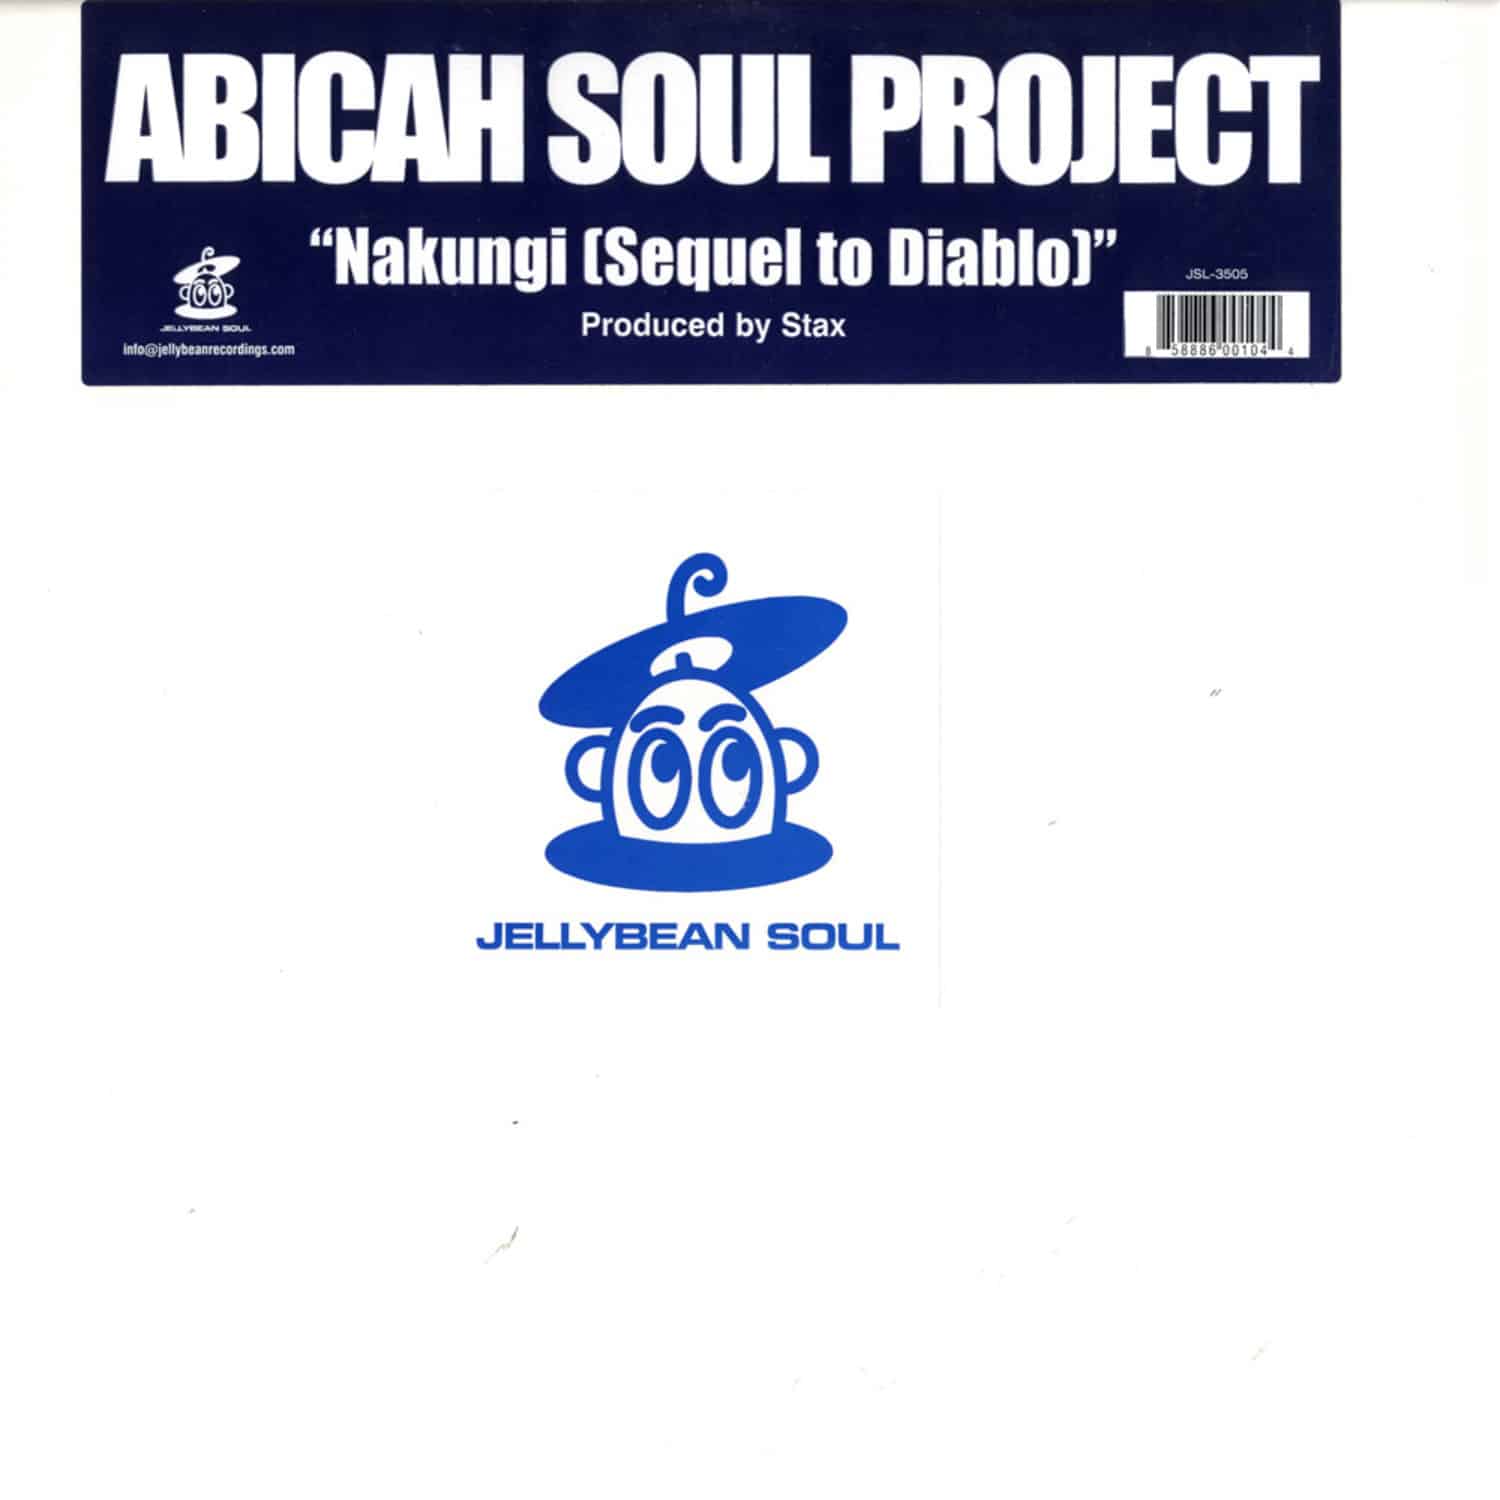 Abicah Soul Project - NAKUNGI